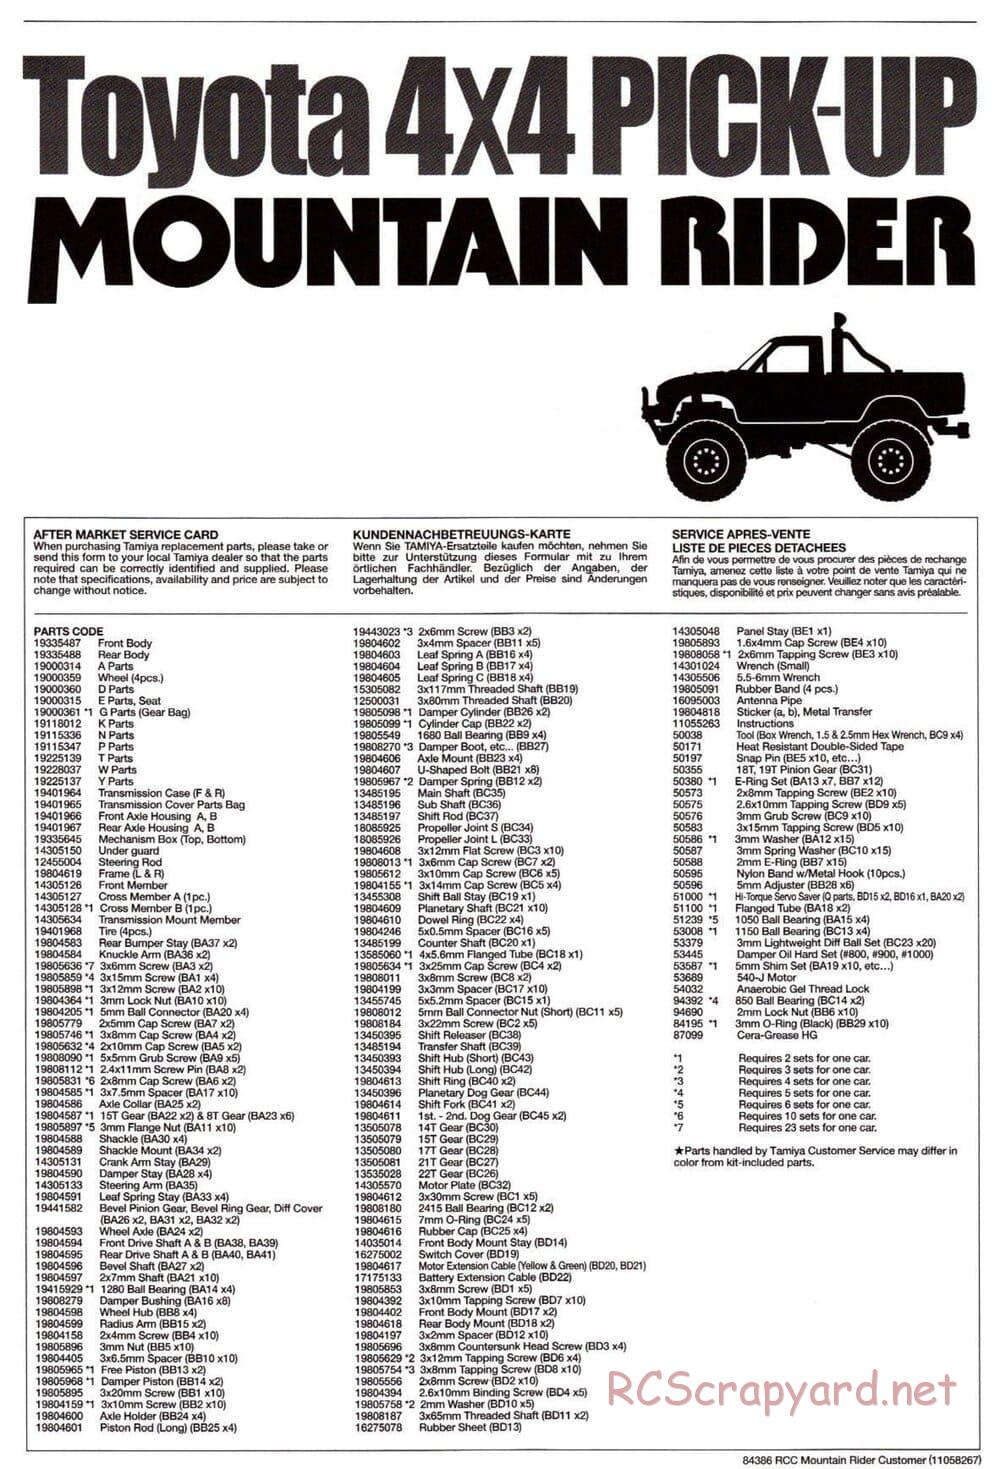 Tamiya - Toyota 4x4 Pick-Up Mountain Rider Chassis - Manual - Page 36